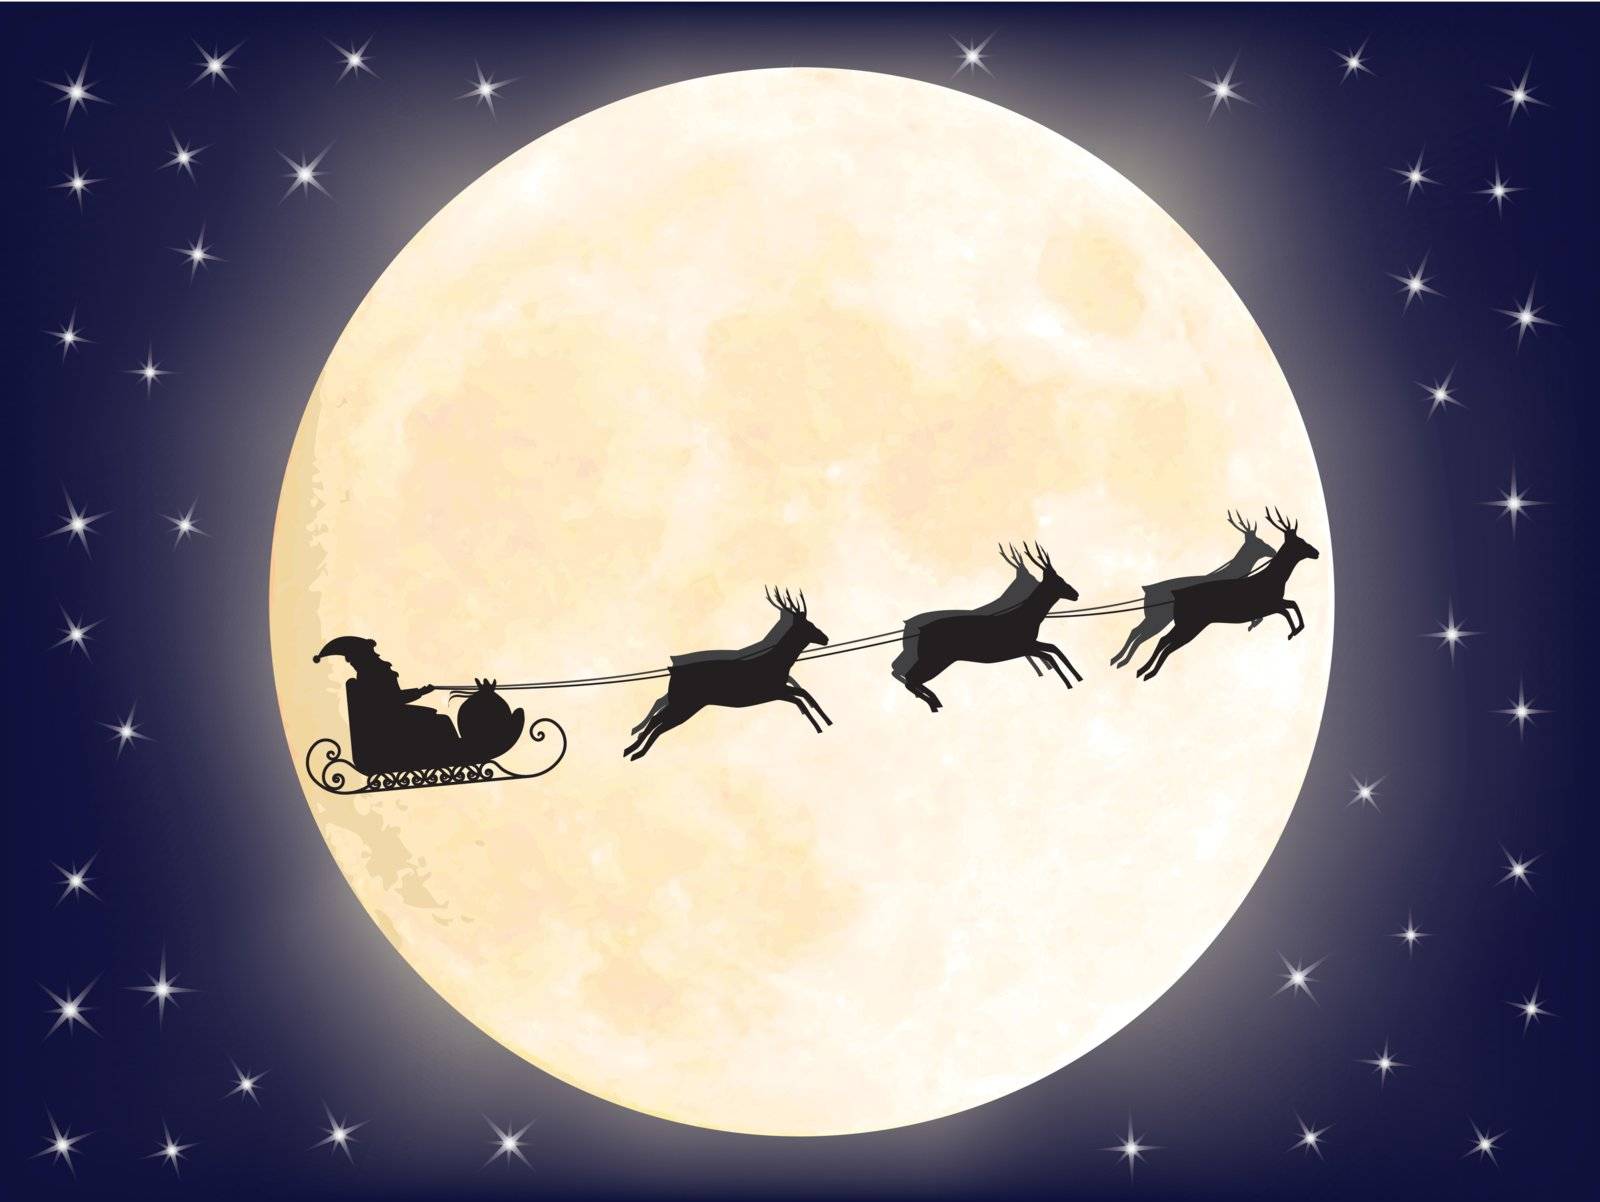 Santa Claus sleigh over full moon vector illustration